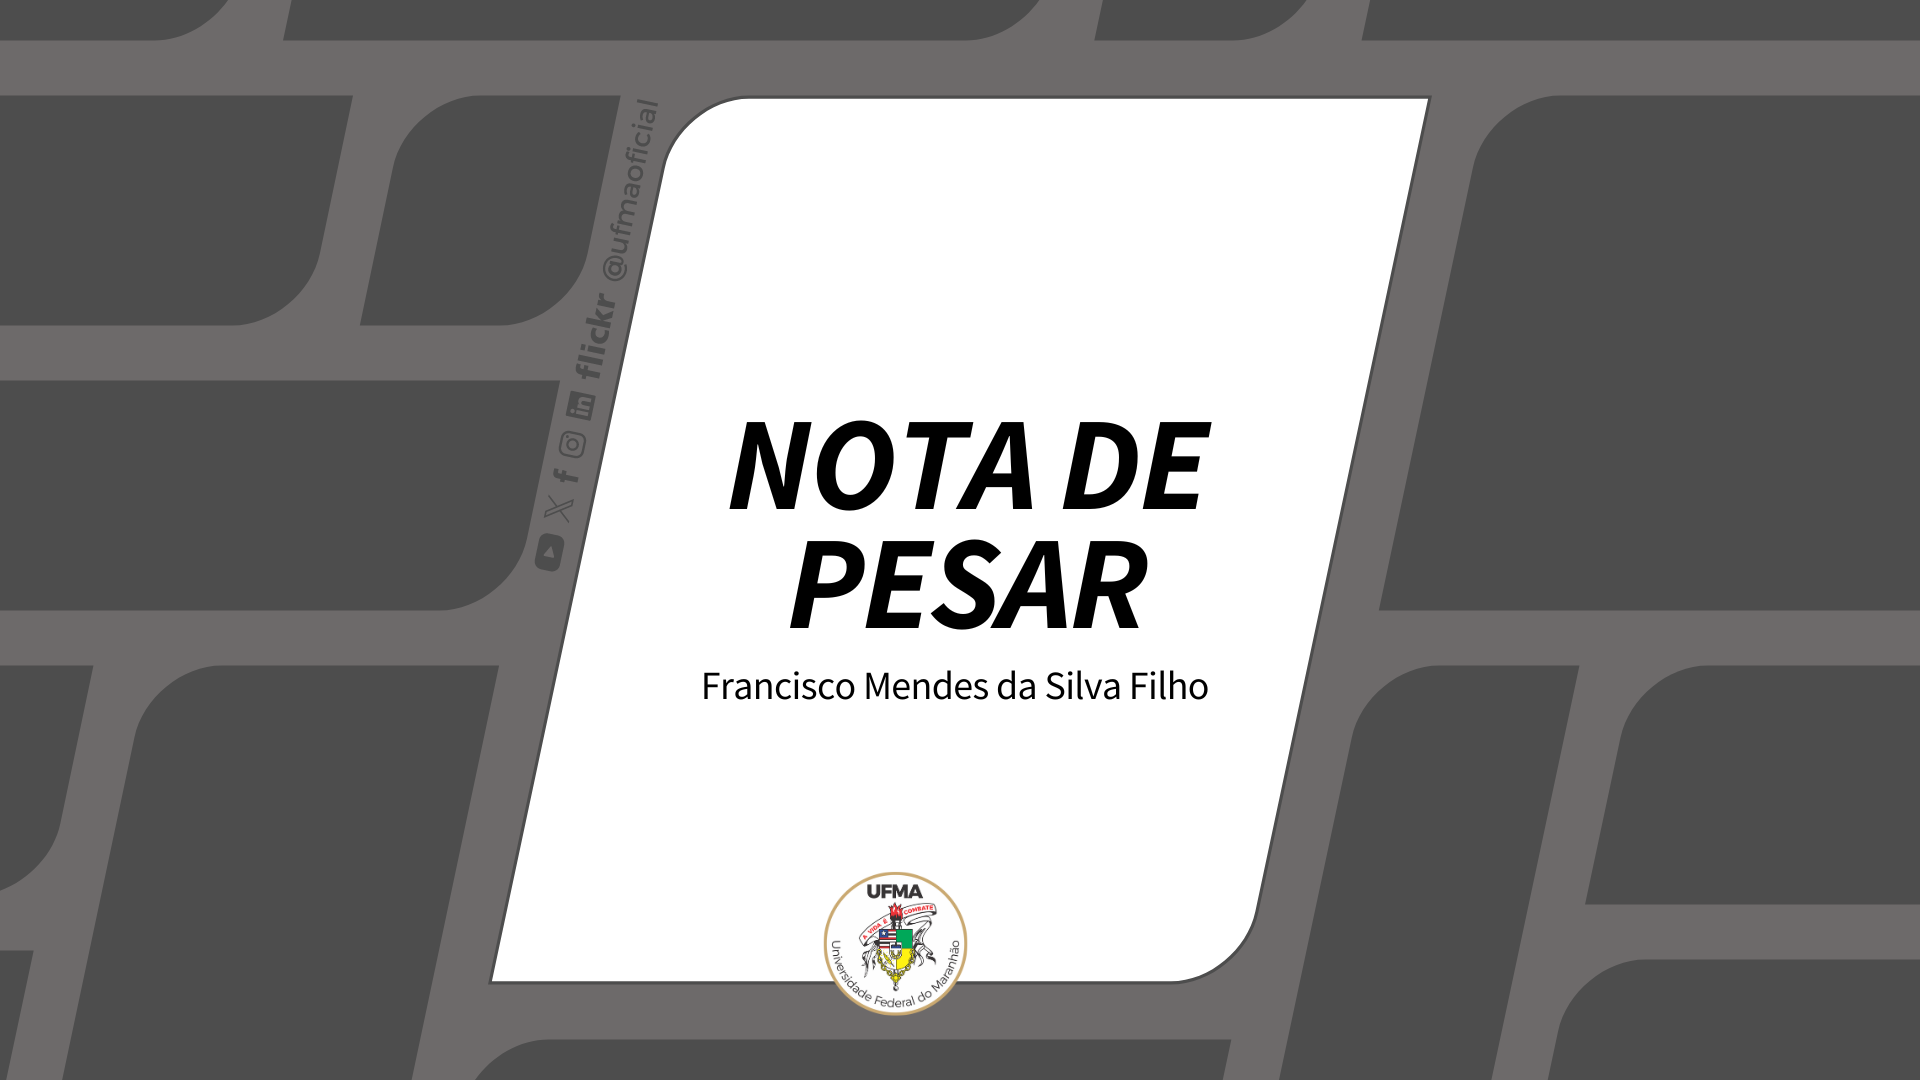 NOTA DE PESAR - Francisco Mendes da Silva Filho